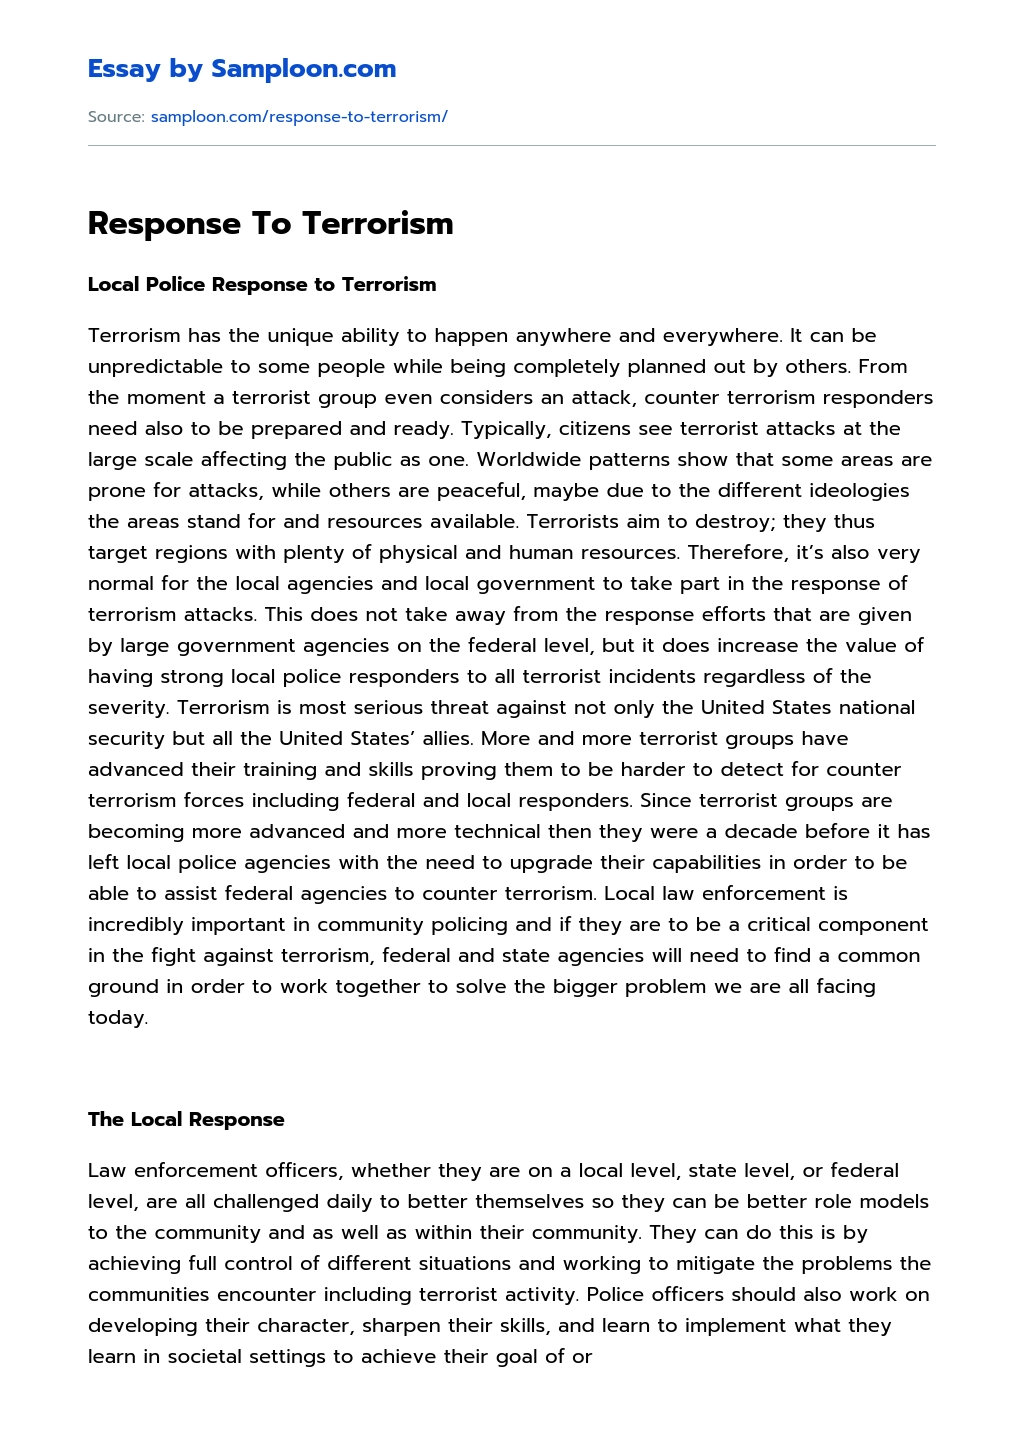 Response To Terrorism essay